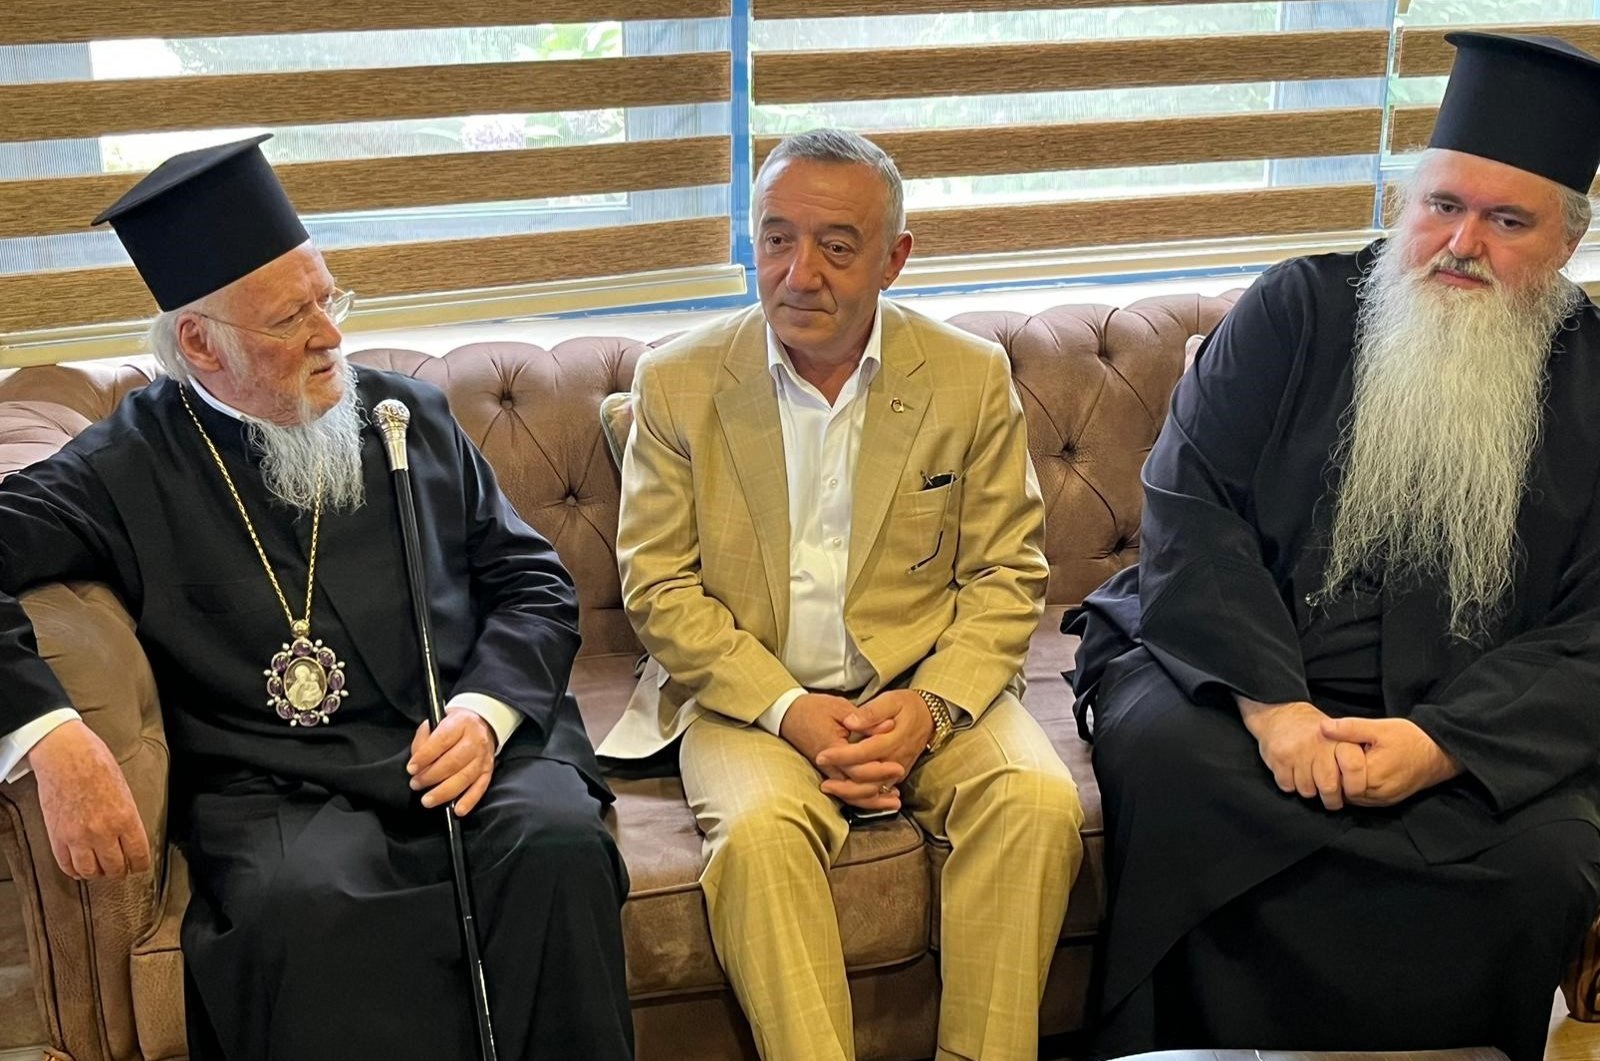 Patriarch Bartholomew presides over sacred ritual in Türkiye’s Trabzon